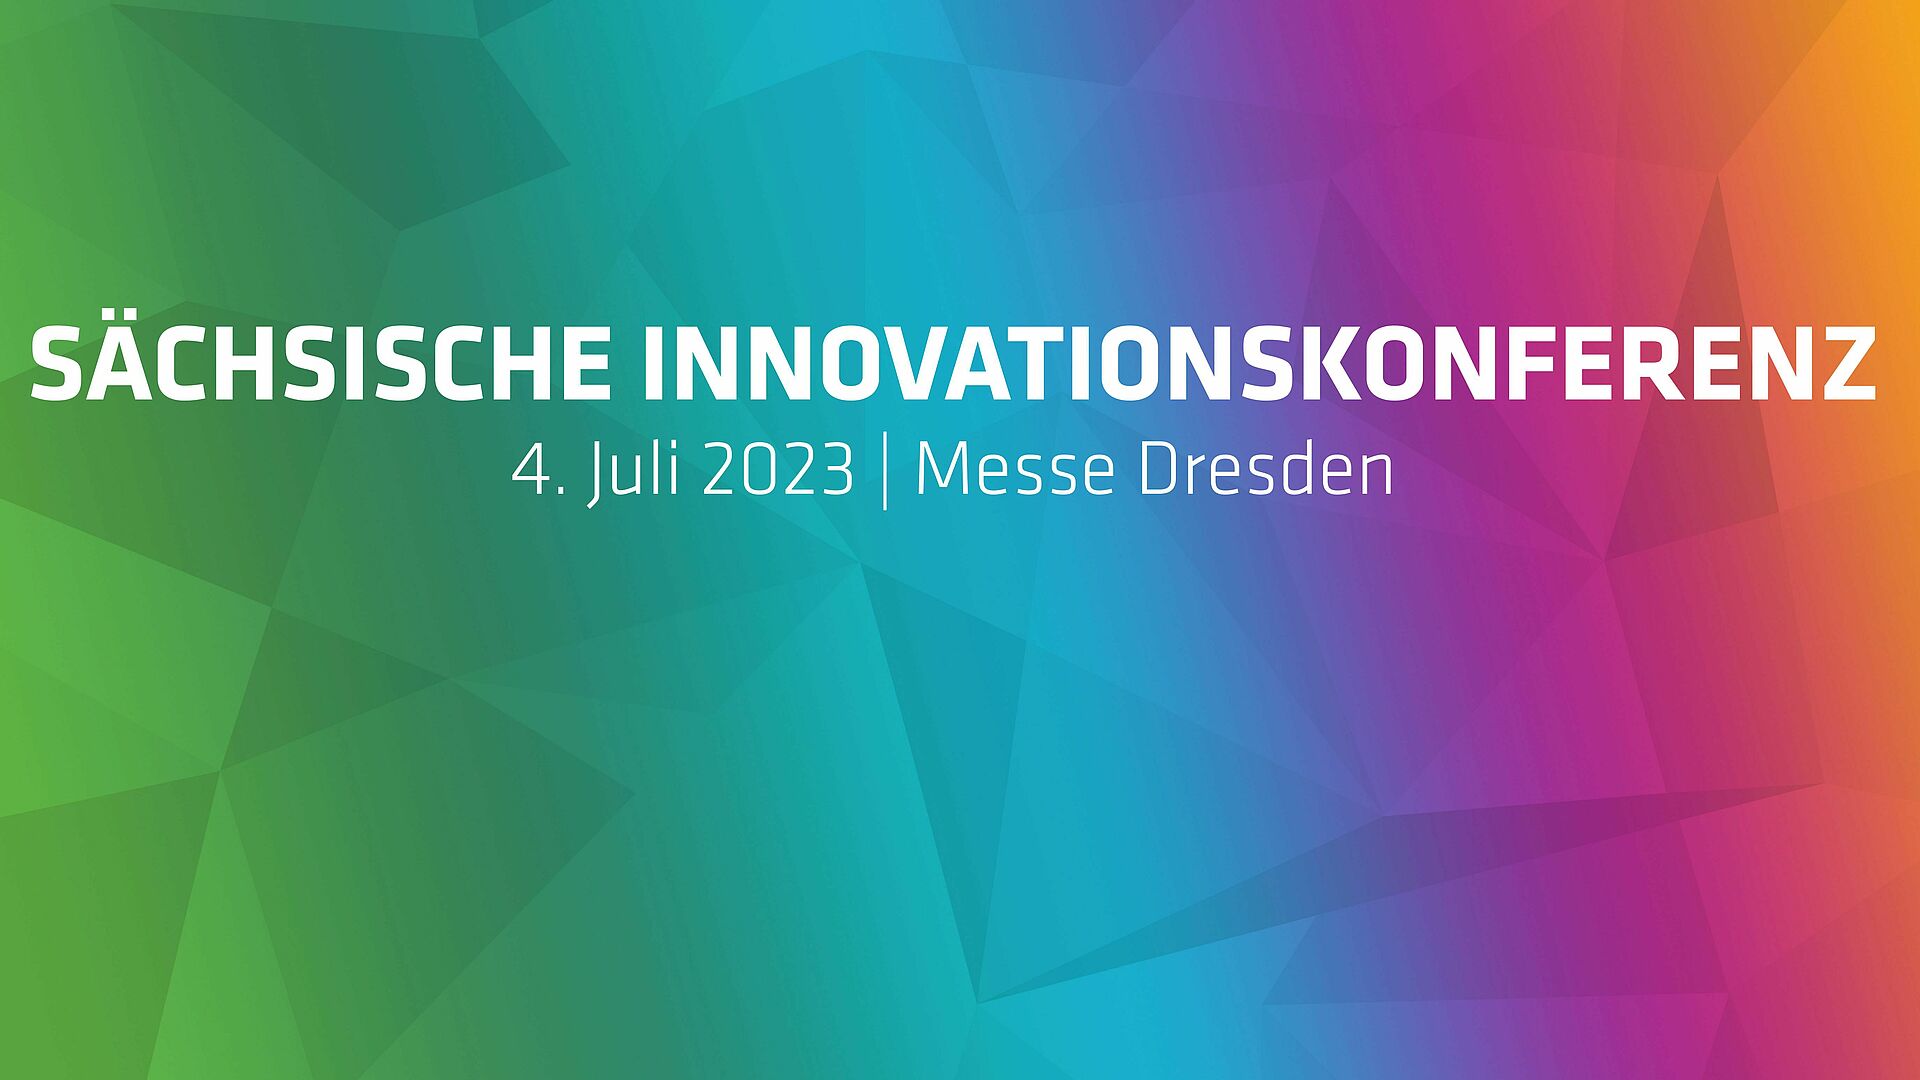 Saechsische Innovationskonferenz I 04.Juli 2023 I Messe Dresden I futureSax